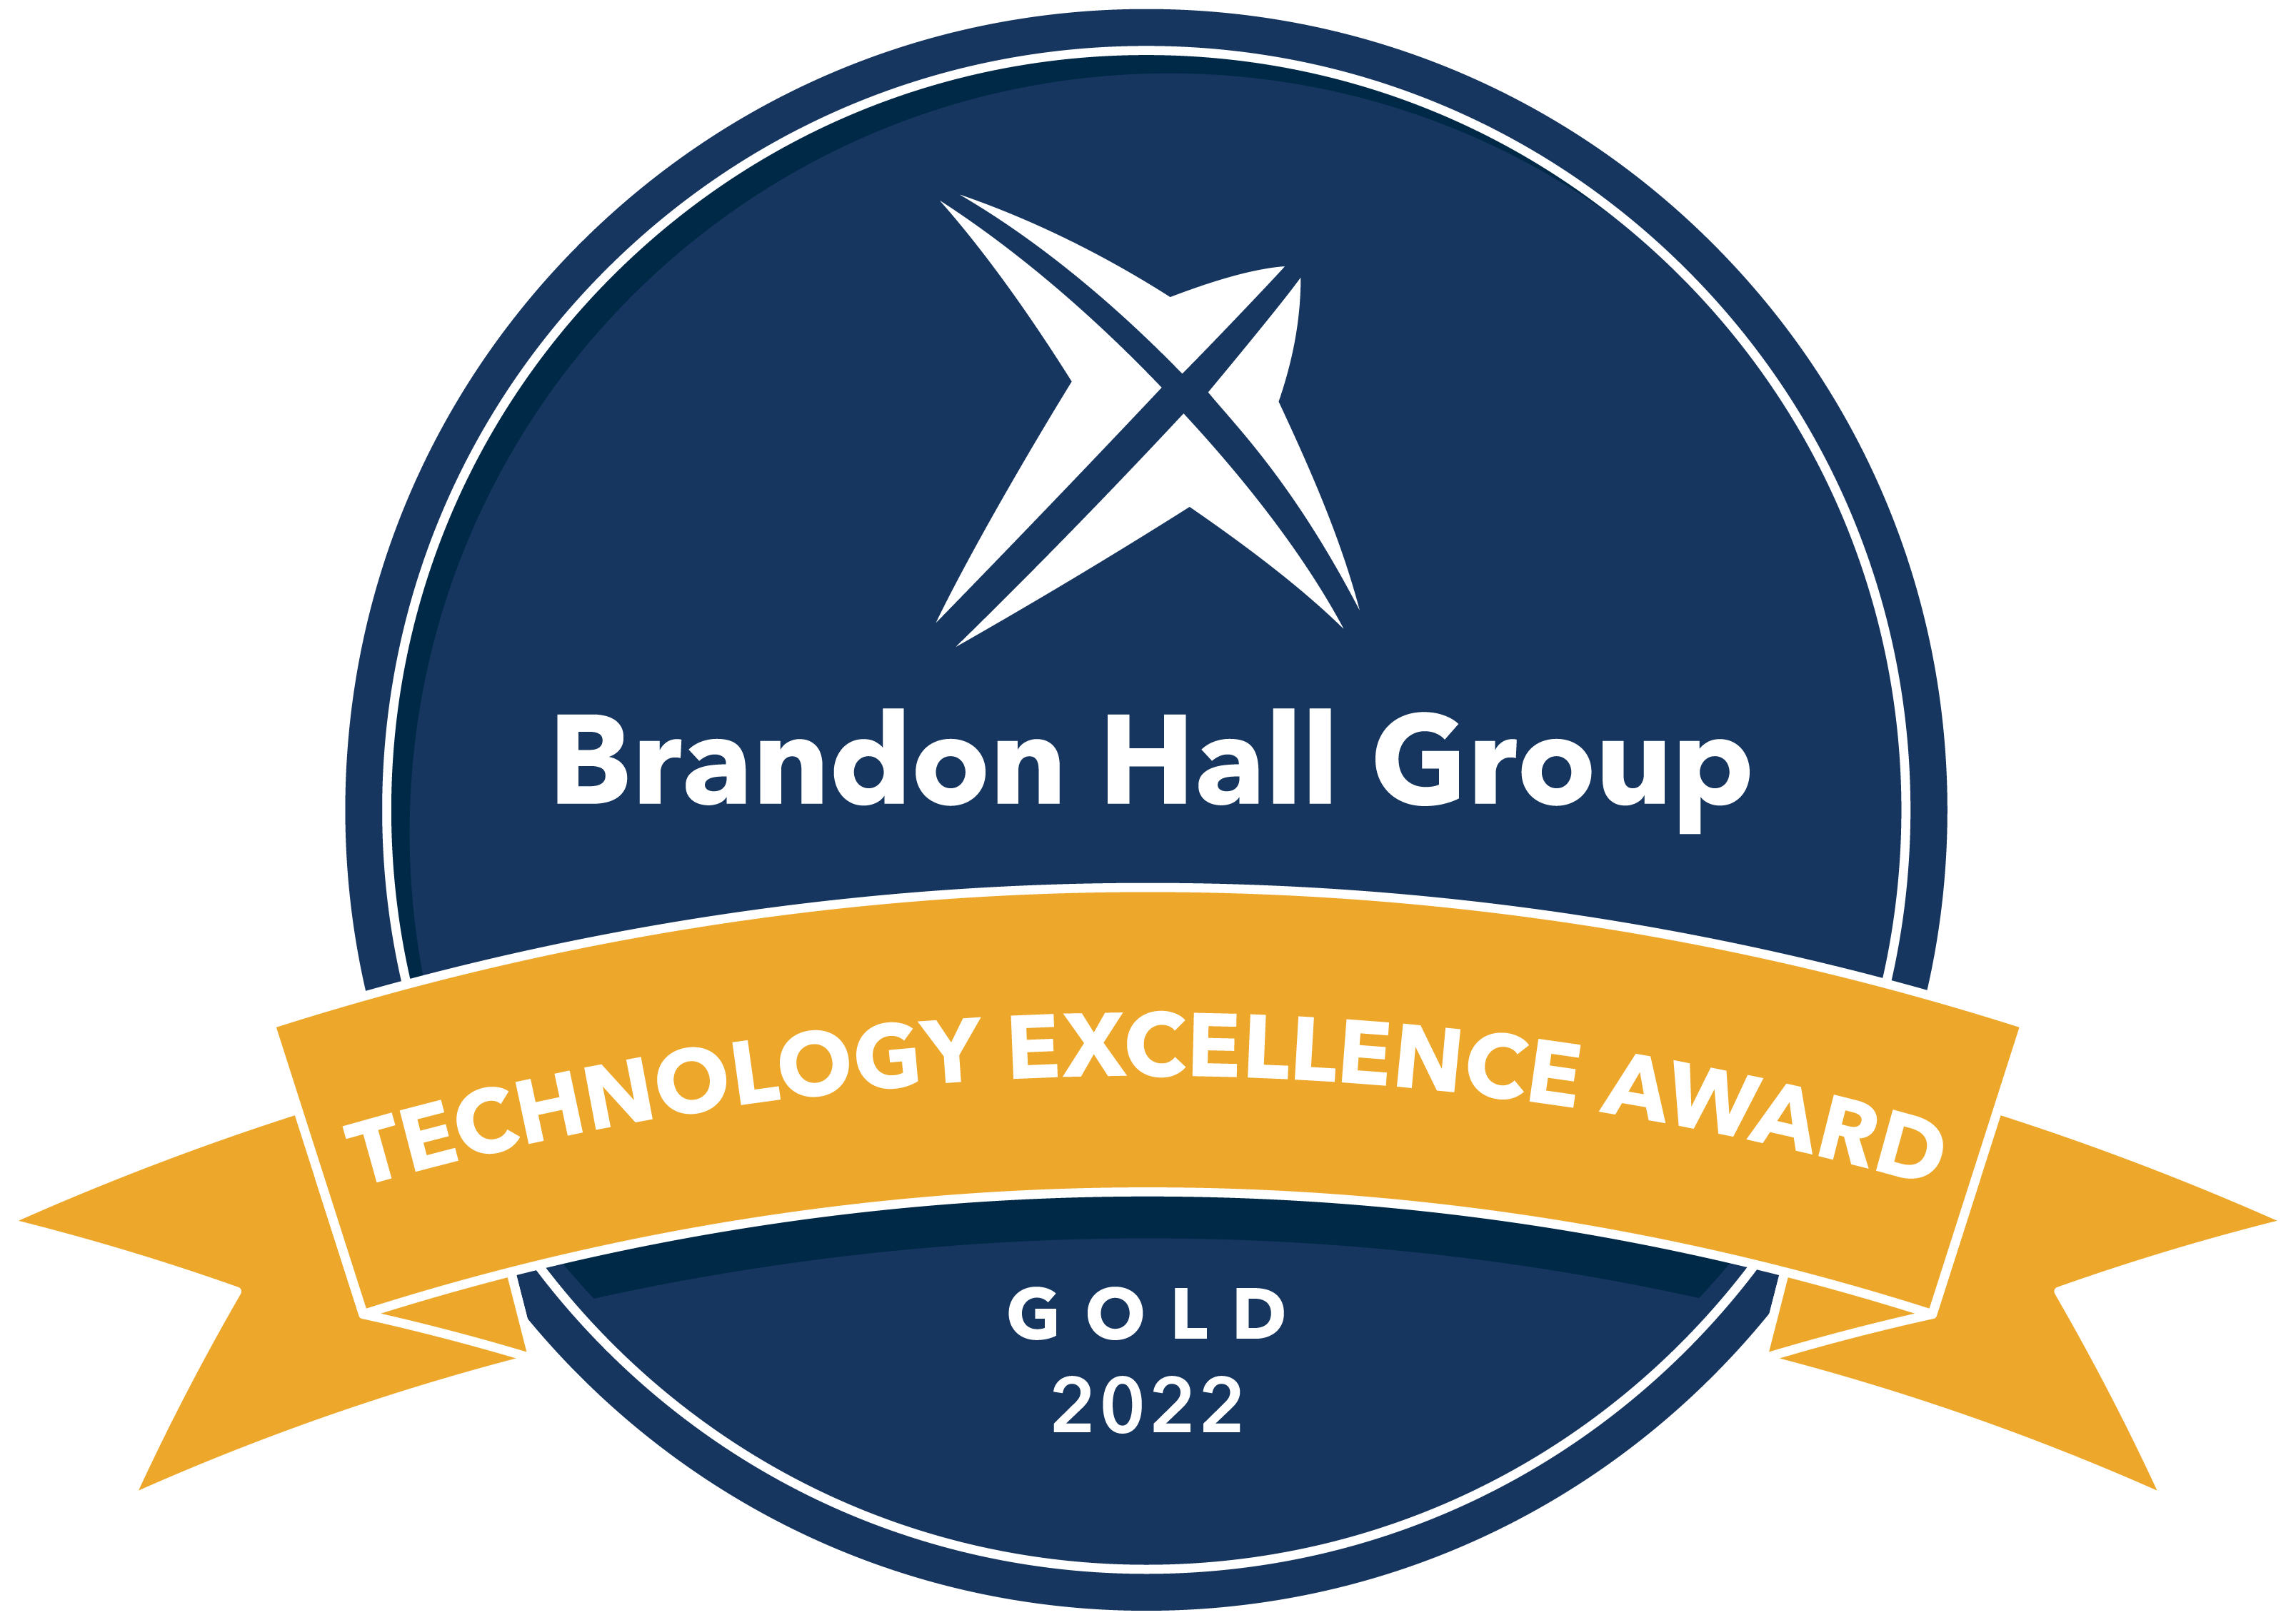 ZEE bags Gold at the prestigious Brandon Hall Technology Awards’22